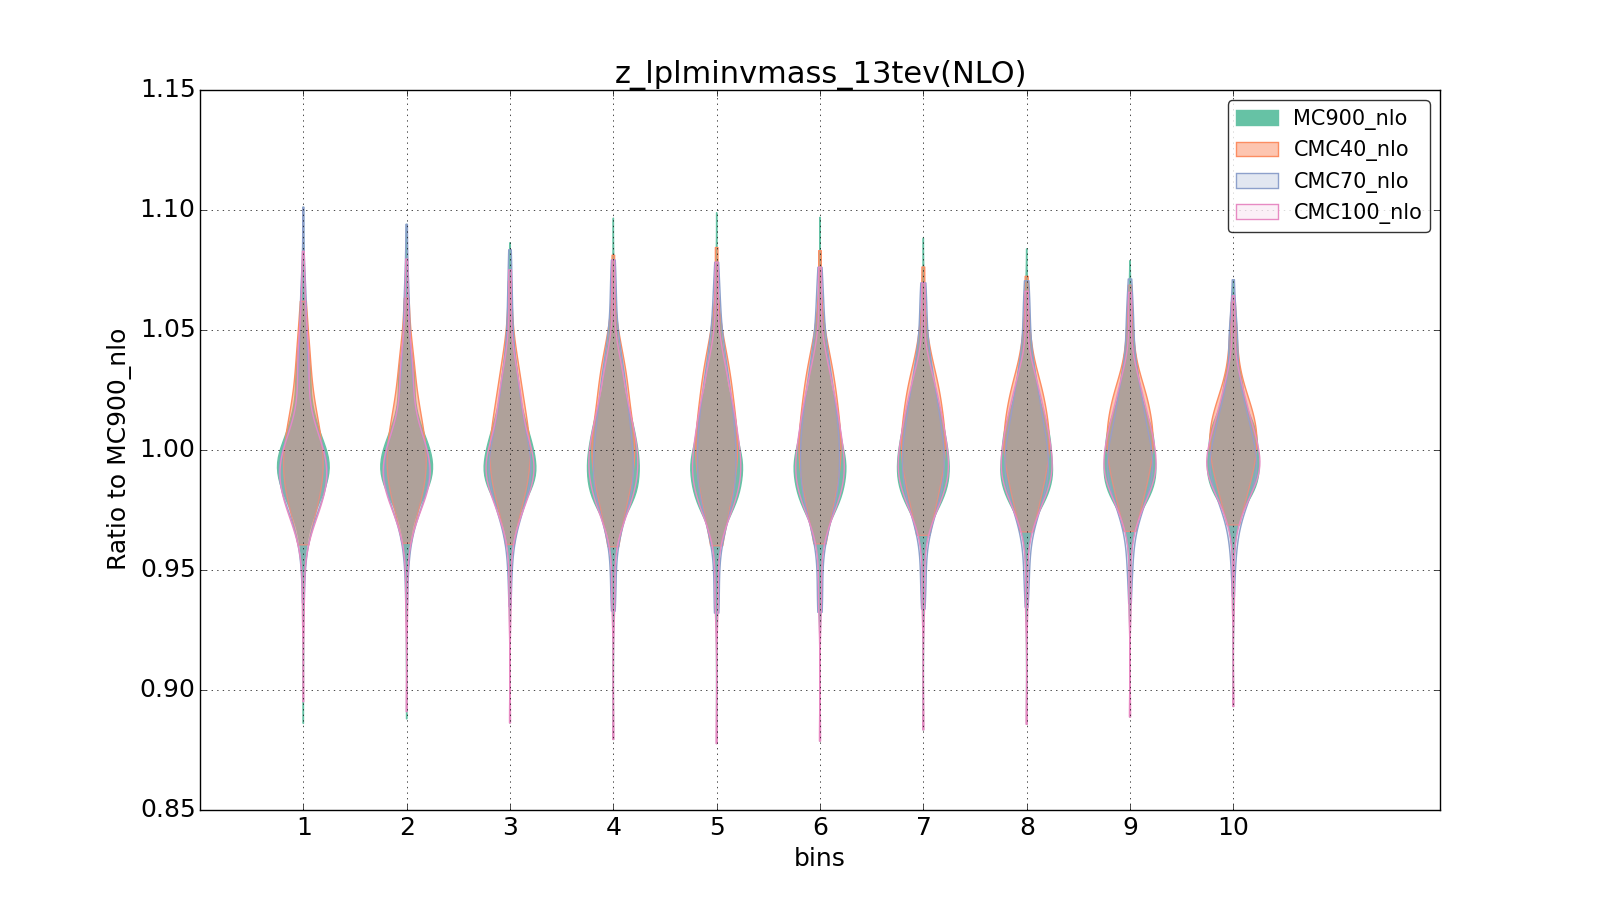 figure plots/CMCpheno/group_1_violinplot_z_lplminvmass_13tev(NLO).png